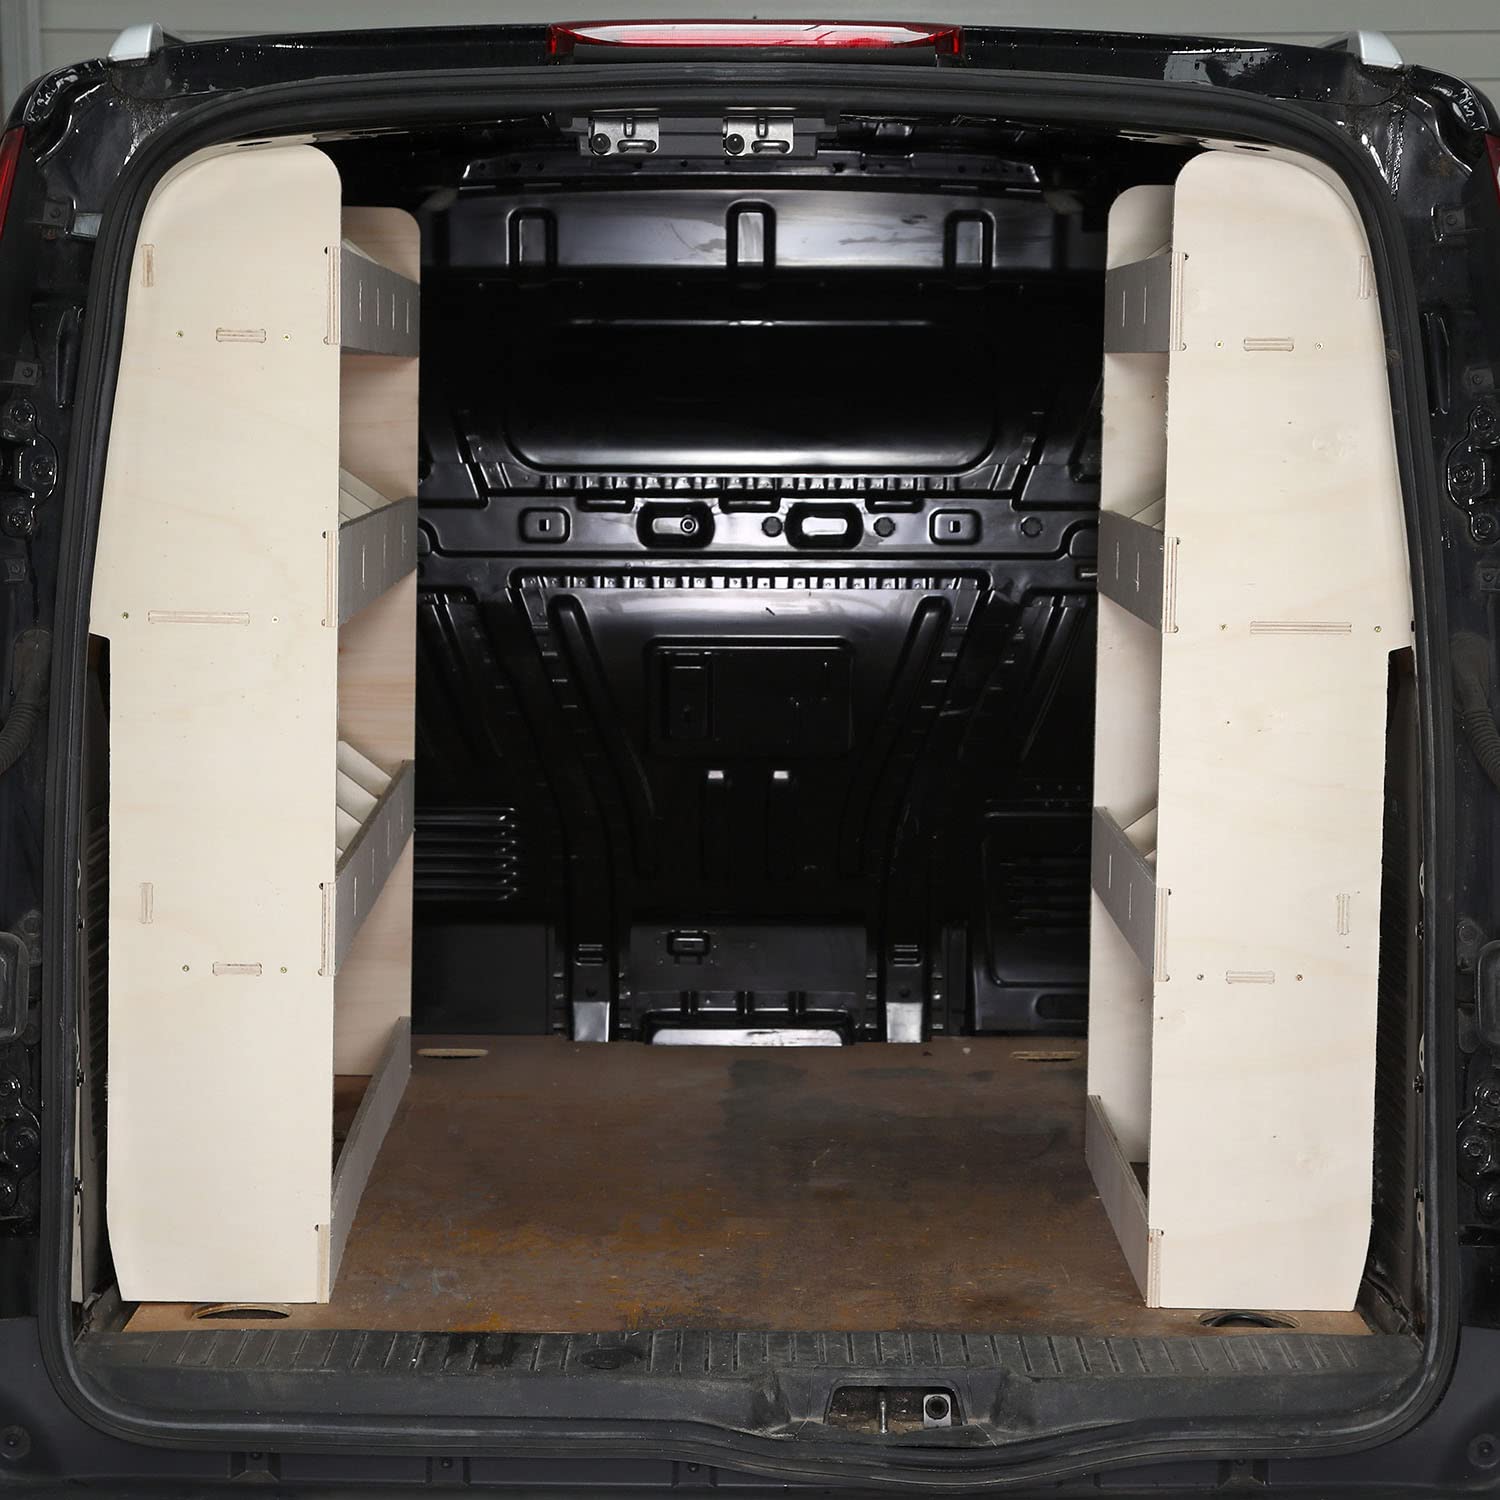 Vanify - Kompatibel mit Ford Connect L1 und L2 2014+ Fahrzeugeinrichtung Fahrzeugregale, doppelte Regale hinten von VANIFY